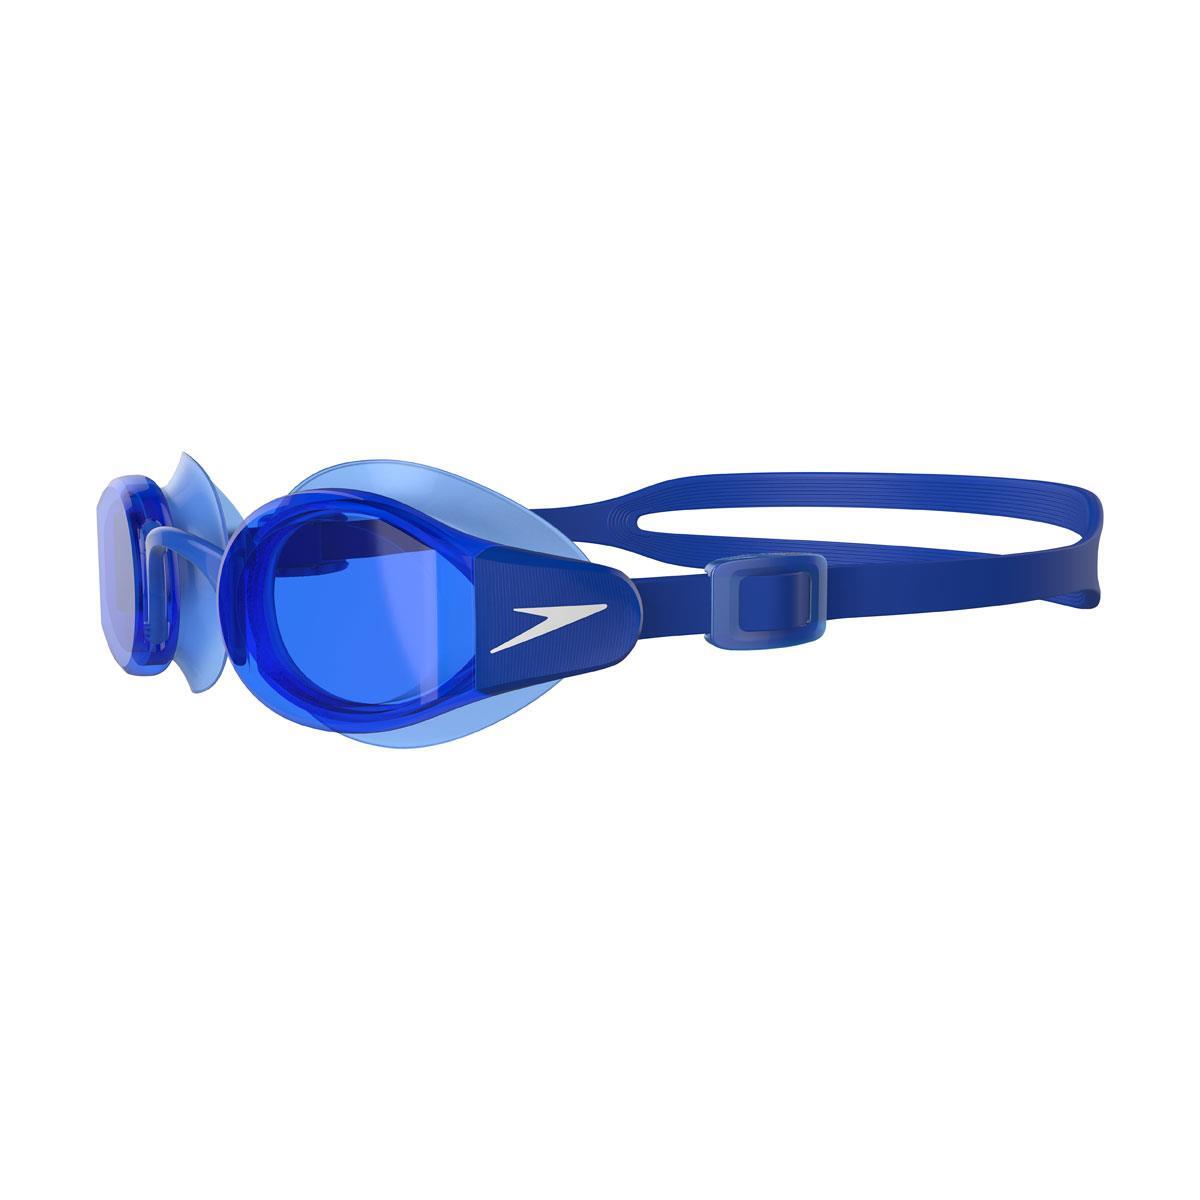 SPEEDO Speedo Mariner Pro Goggles - Beautiful Blue/ Translucent/ White/ Blue